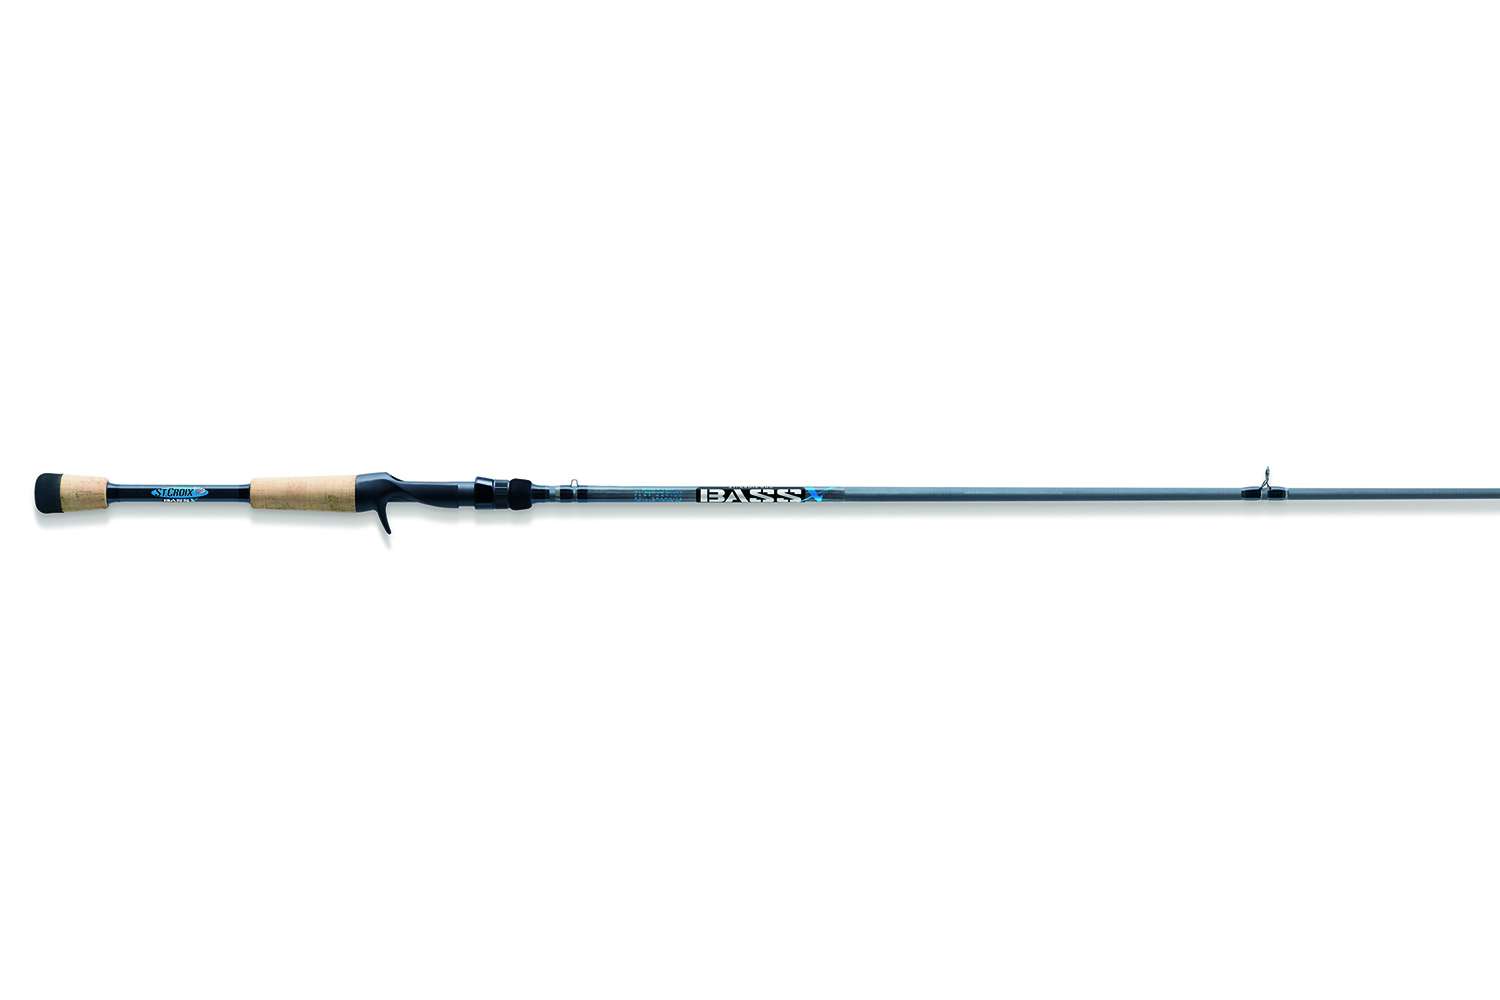 St. Croix Bass X casting rod, $100